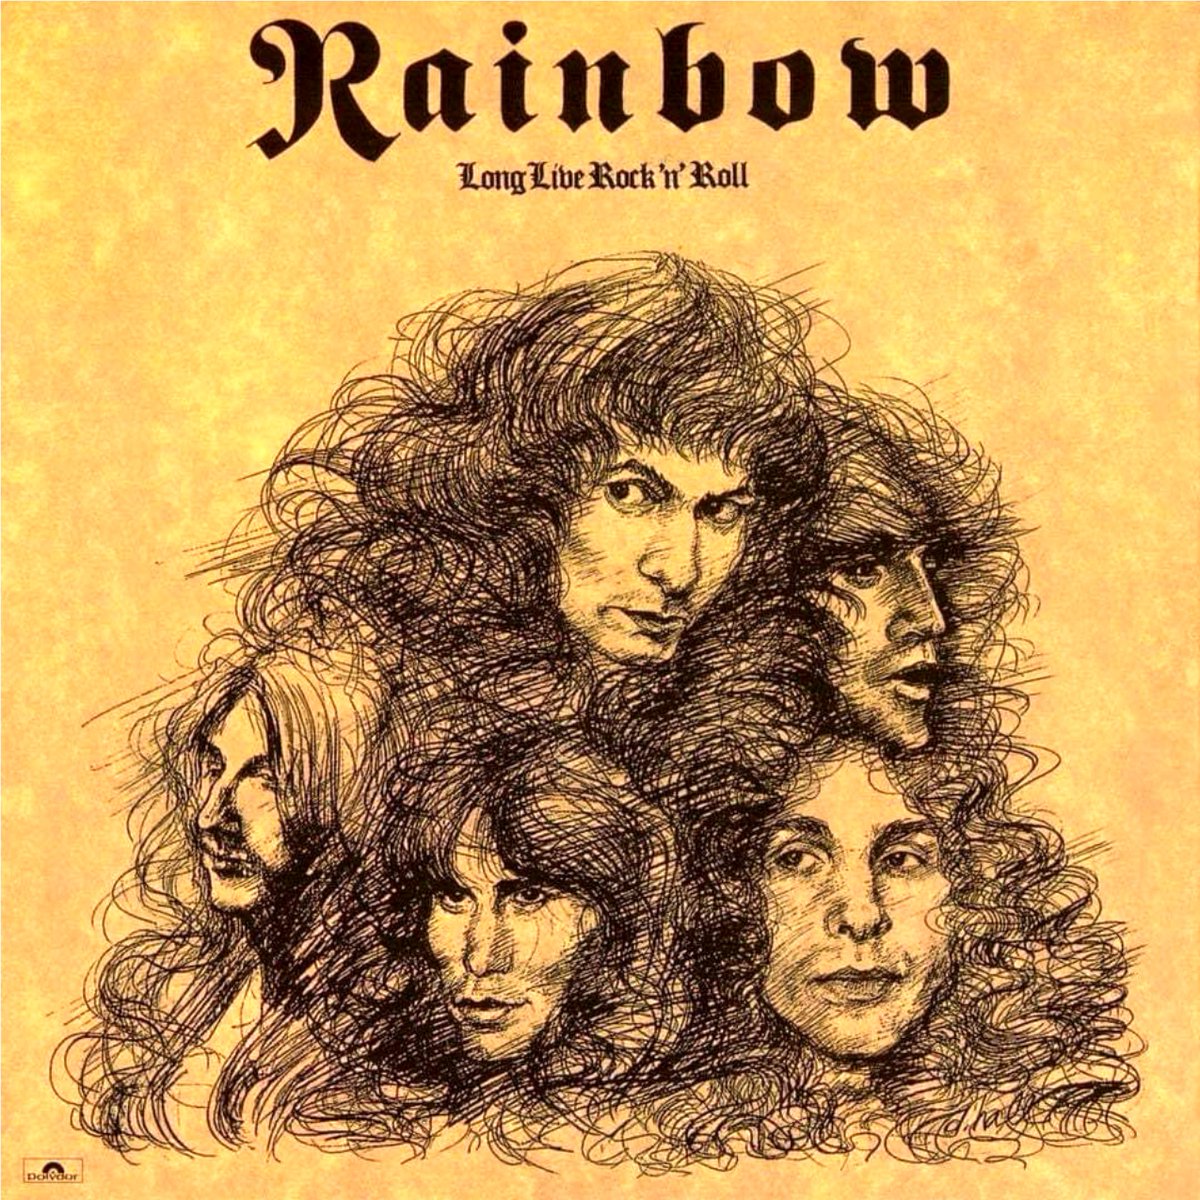 80's Metal History (Apr. 14th): Ronnie's Rainbow Wrap Up... Raining Blood In Europe... Raging Metal Attack... Accept, Motörhead, Whitesnake & more. Get the details here metalshoprocks.blogspot.com 

#80sMetal #MetalRadio #ClassicMetal #ThrashMetal #HardRock #HeavyMetal #ClassicRock